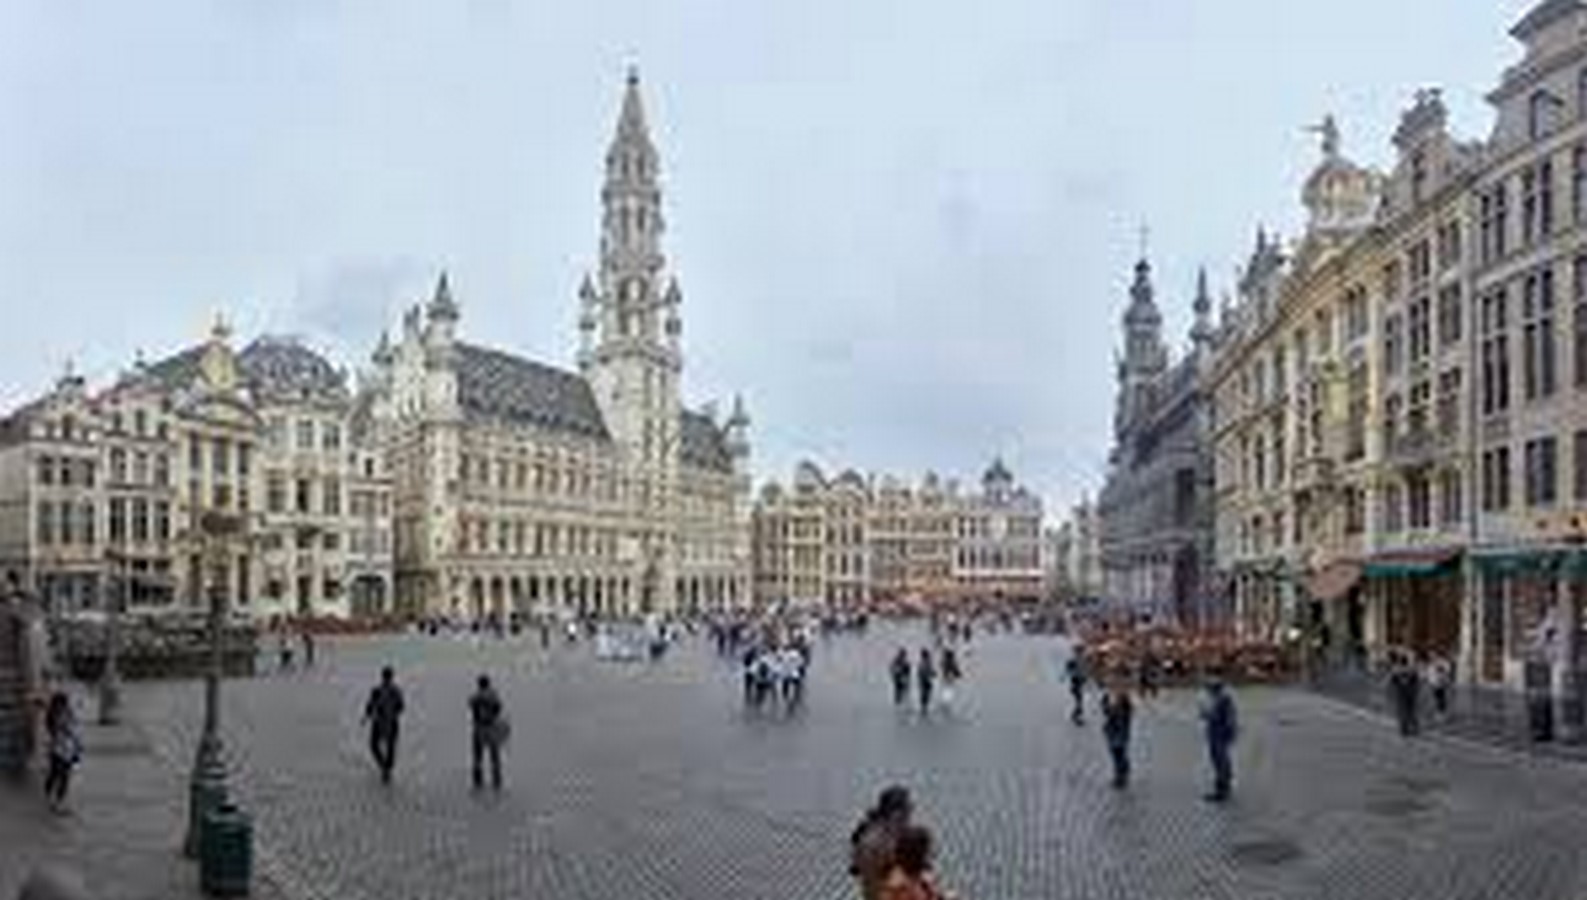 Grand Place, Brussels, Belgium - Sheet1